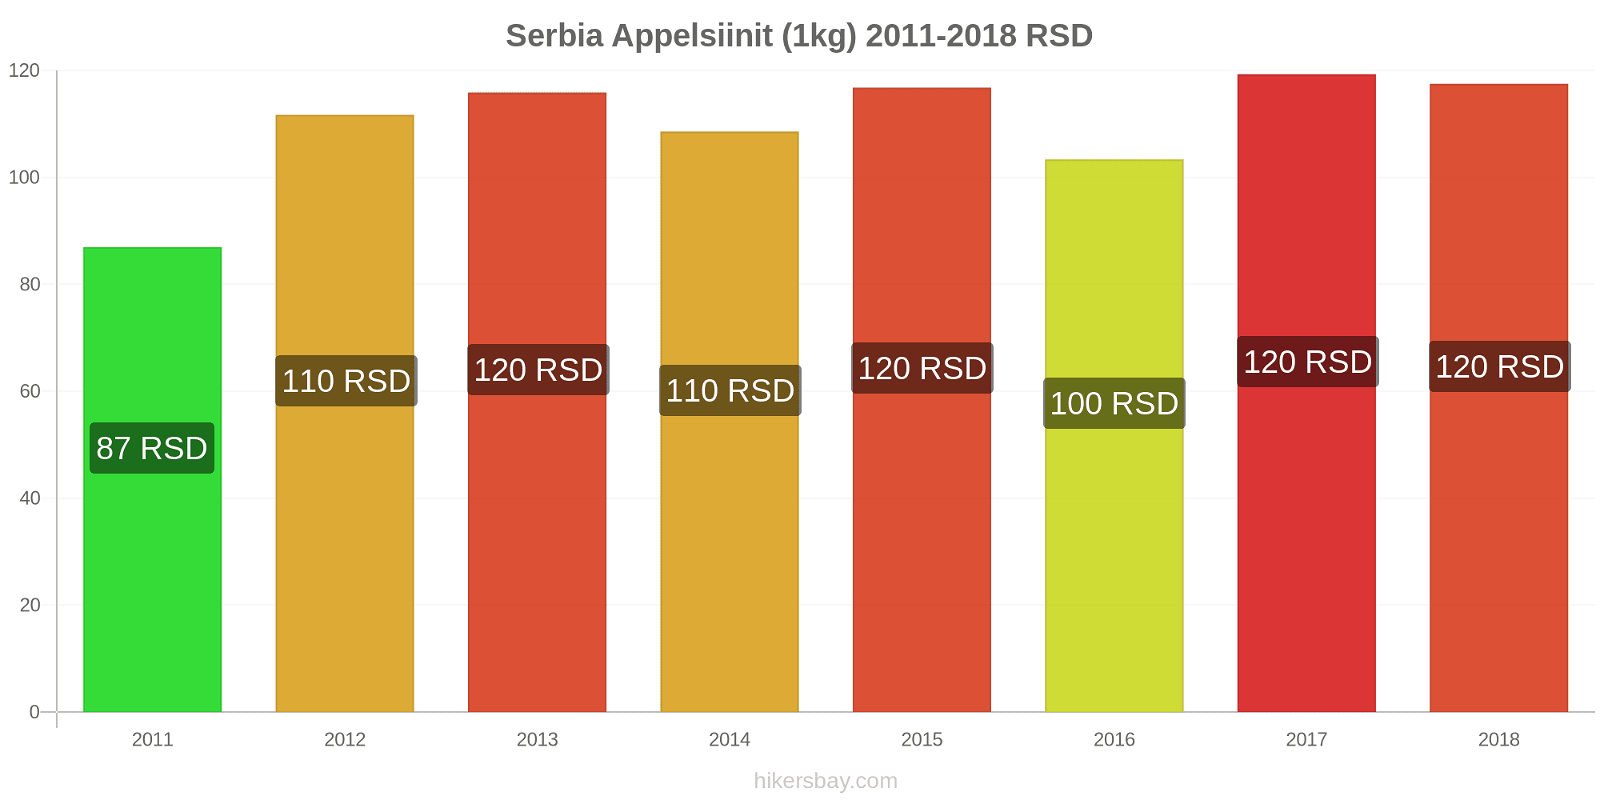 Serbia hintojen muutokset Appelsiinit (1kg) hikersbay.com